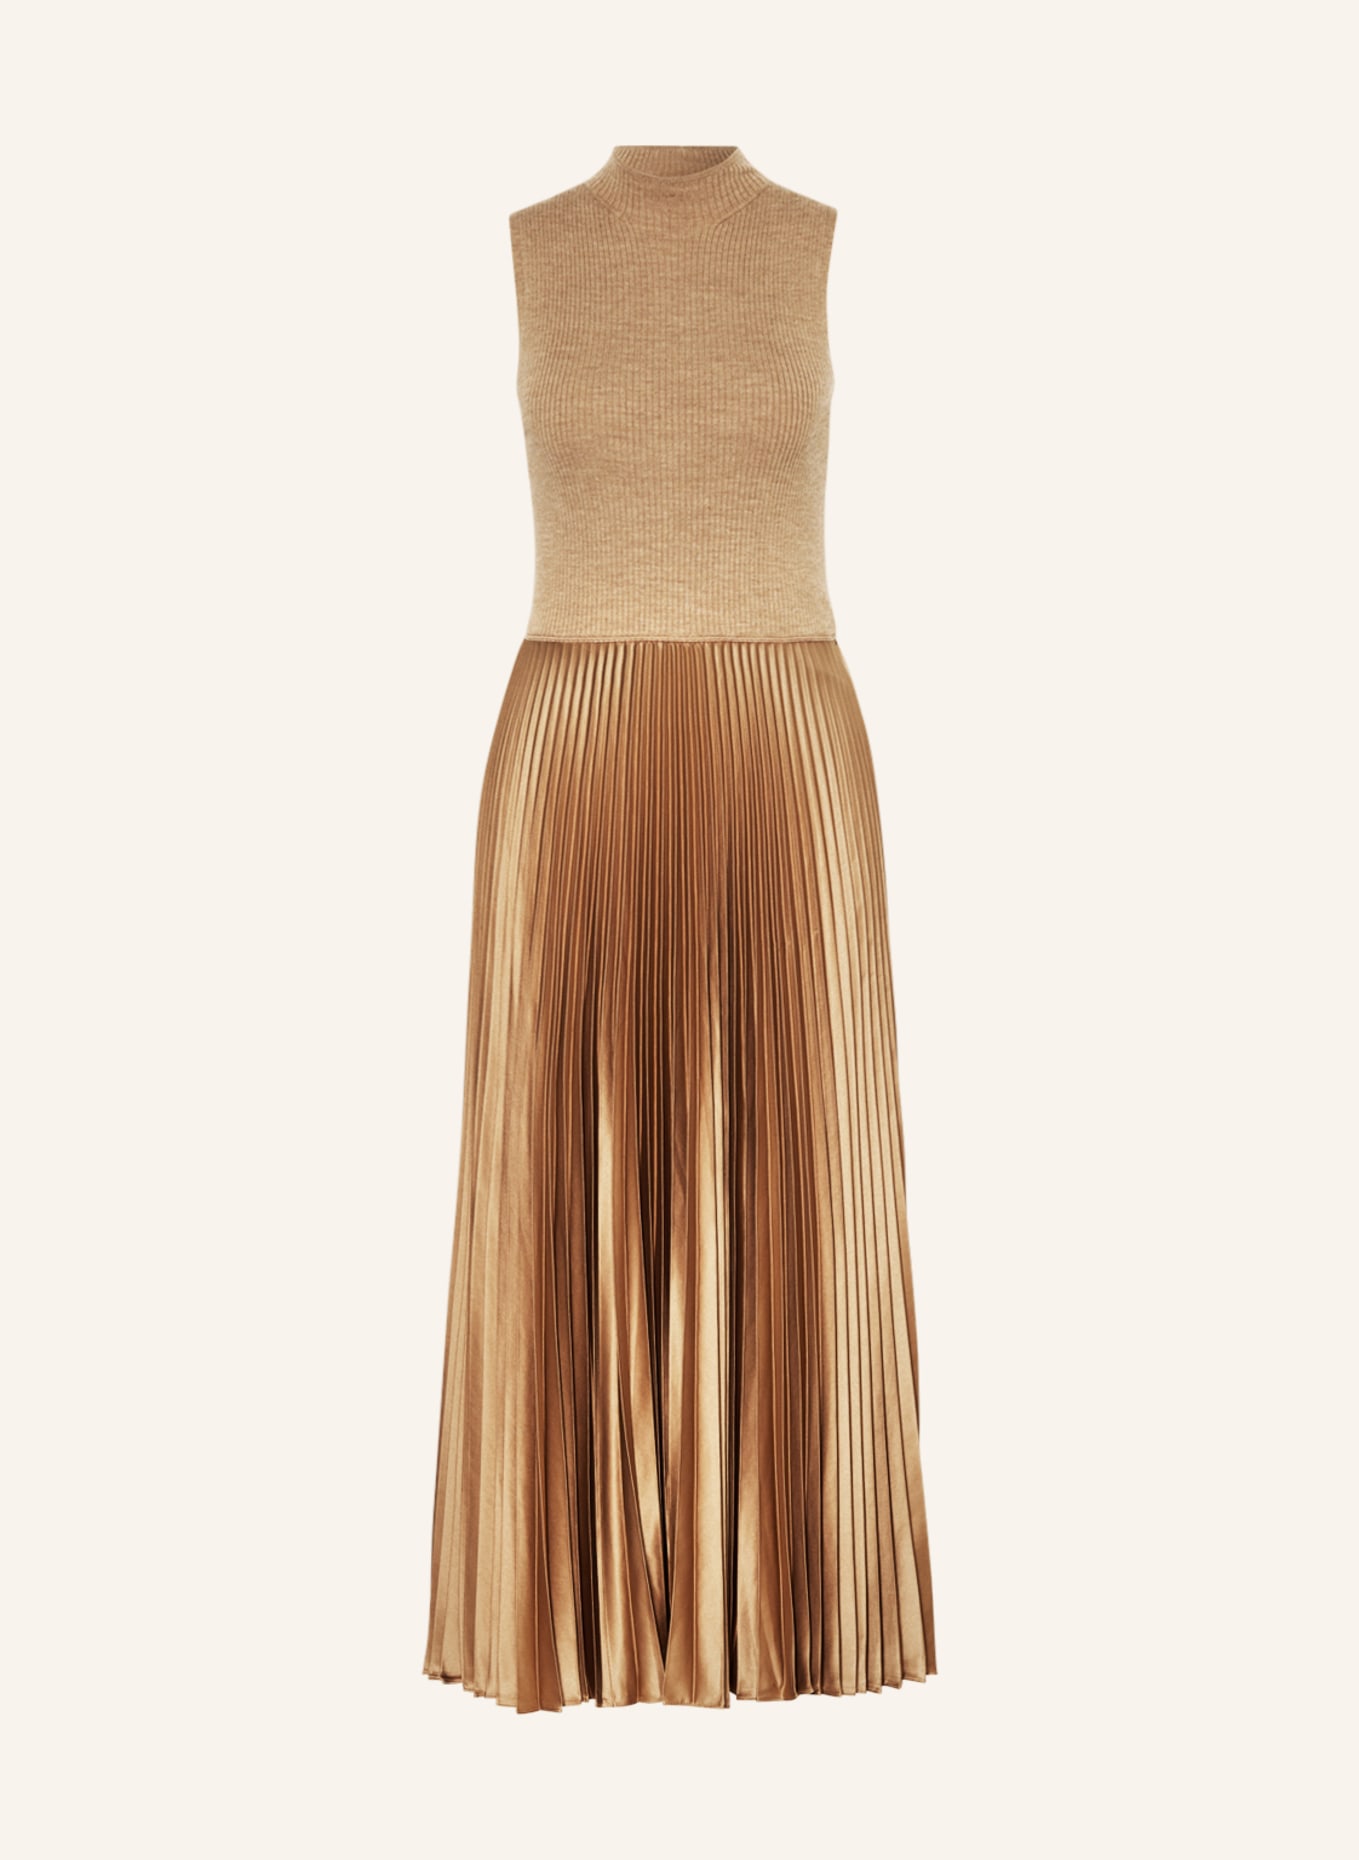 POLO RALPH LAUREN Kleid im Materialmix, Farbe: CAMEL (Bild 1)